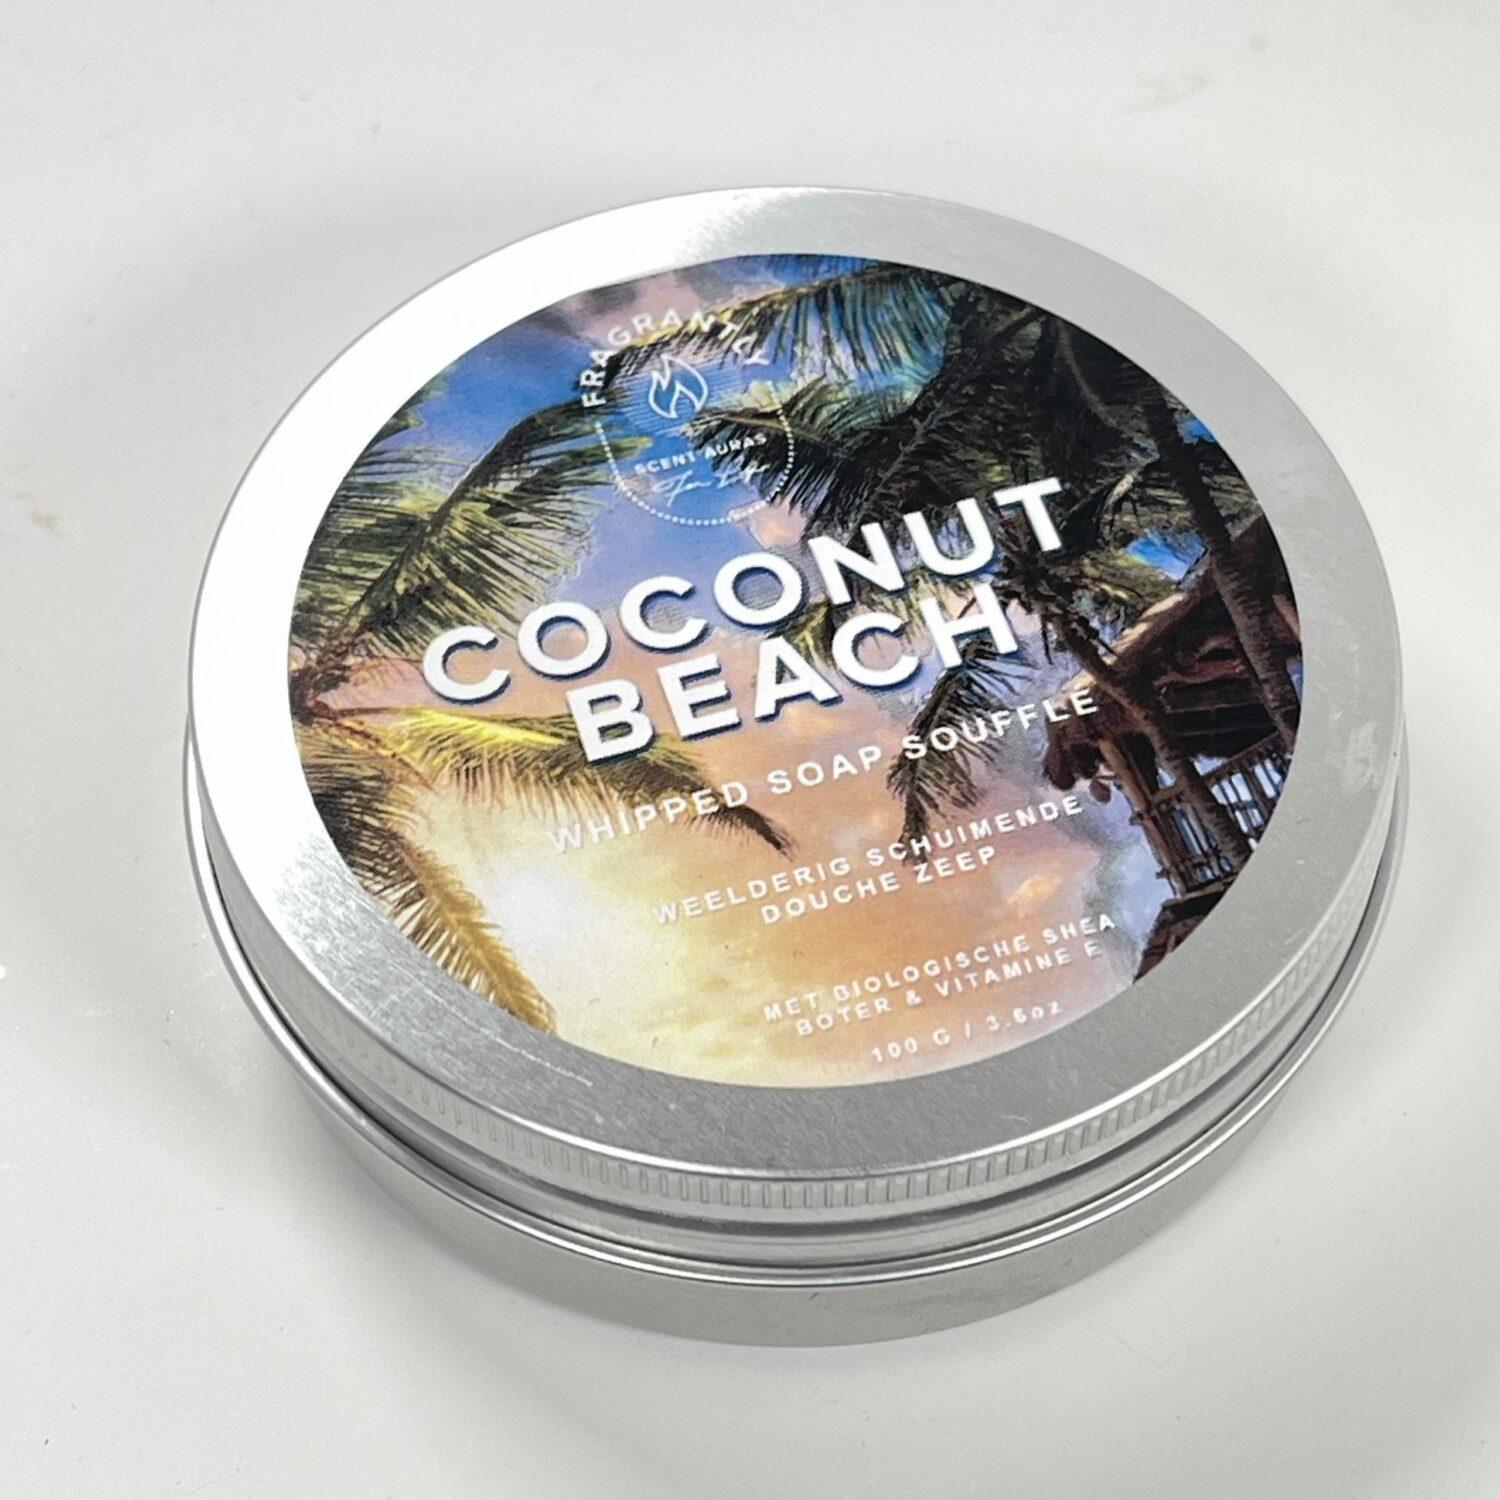 Fragrantly Coconut Beach whipped soap souffle in blik